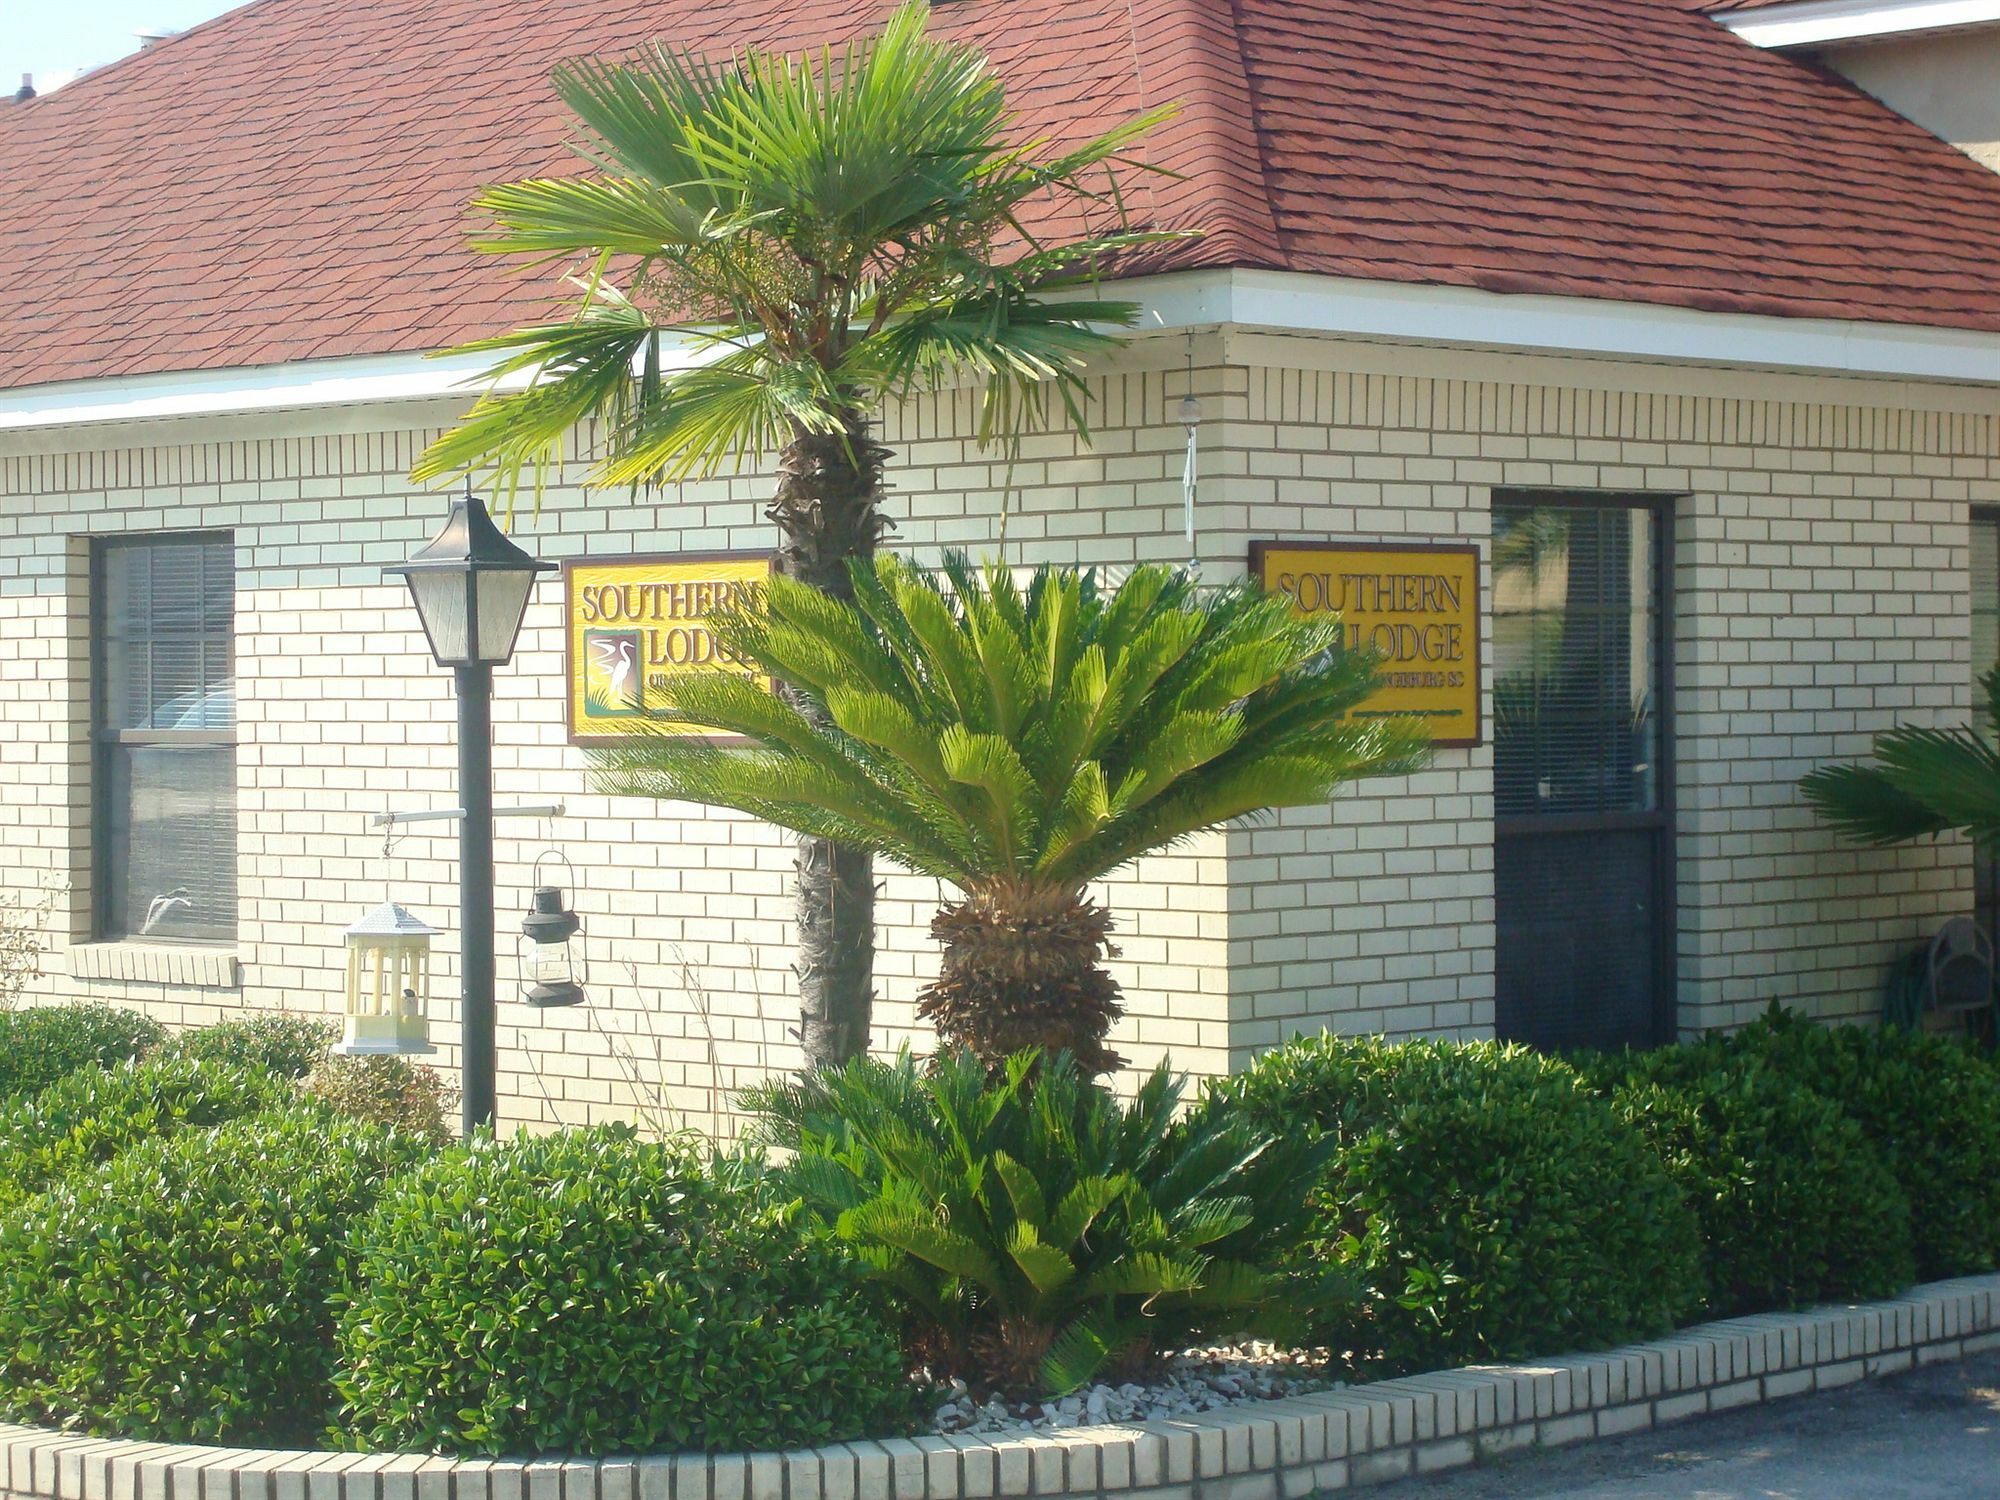 Southern Lodge Orangeburg Exterior foto